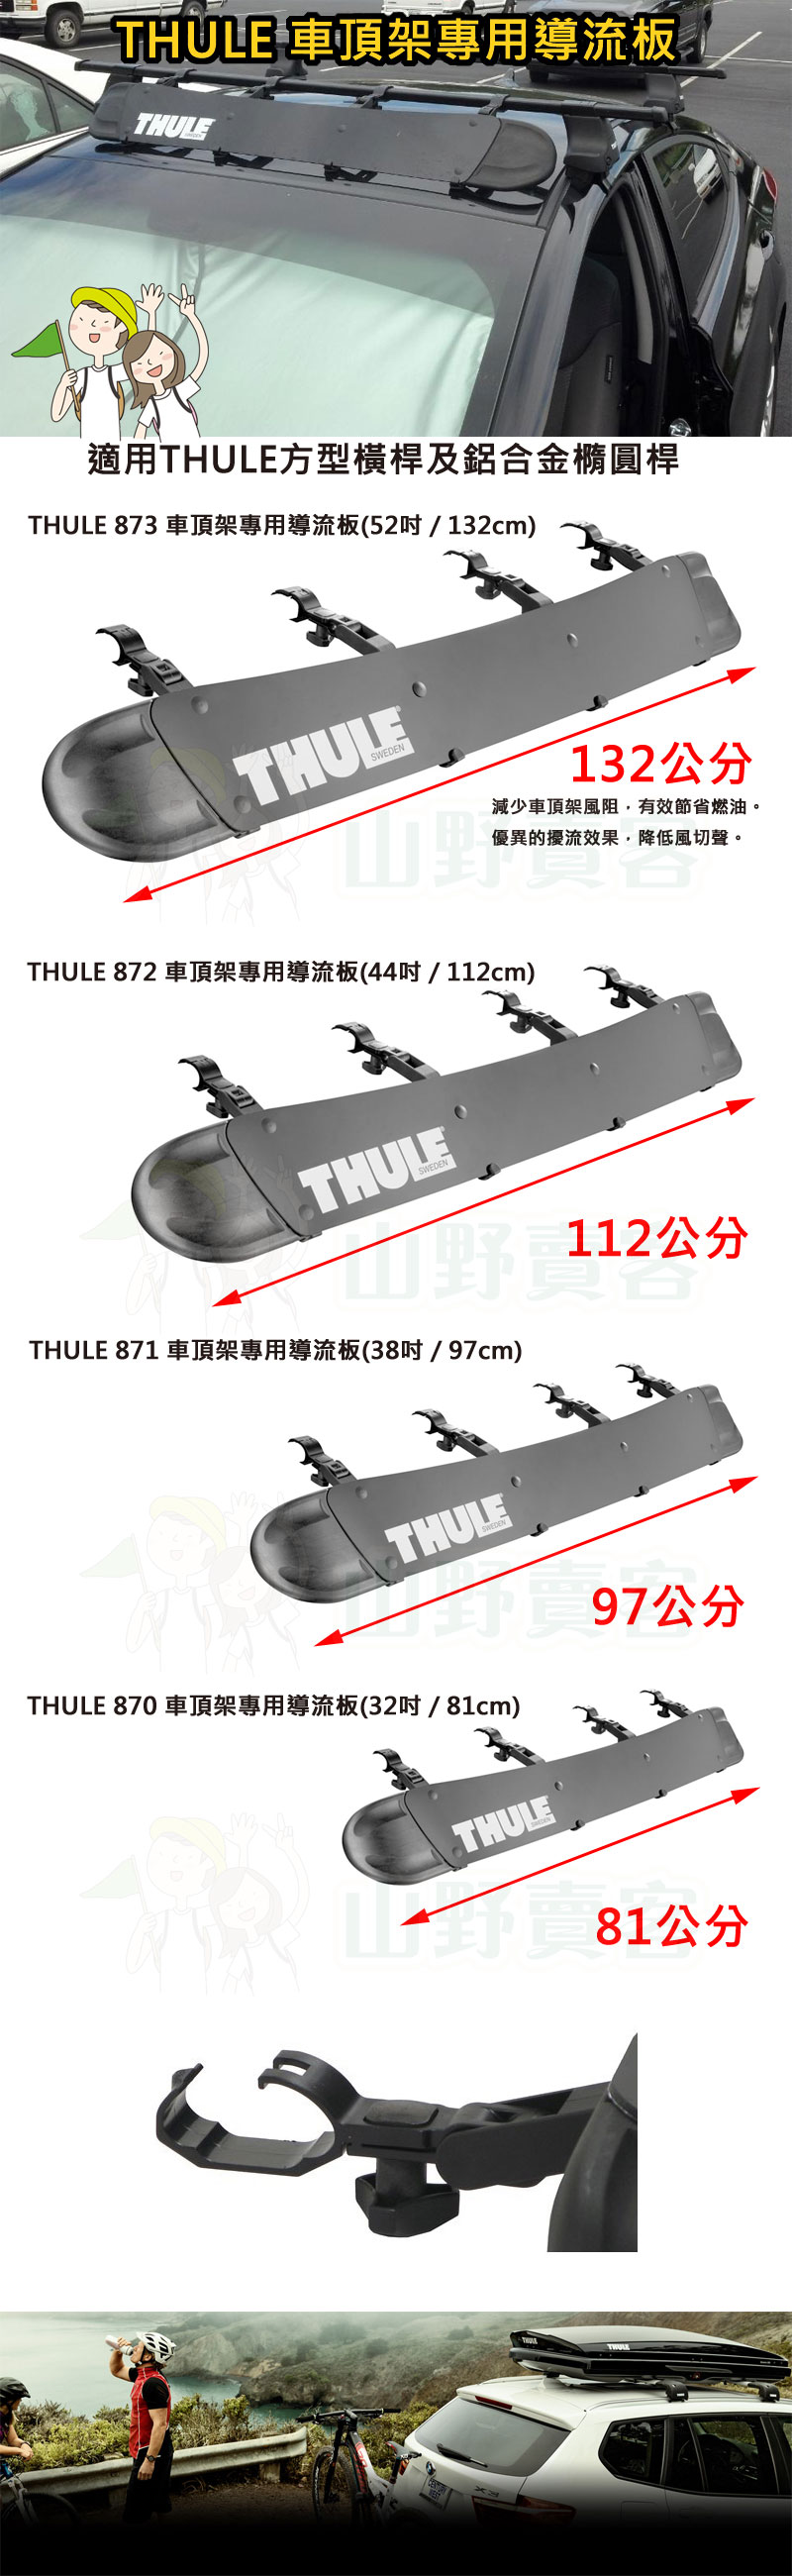 Thule 871 都樂 USA-871XT 38吋 97cm 擾流板